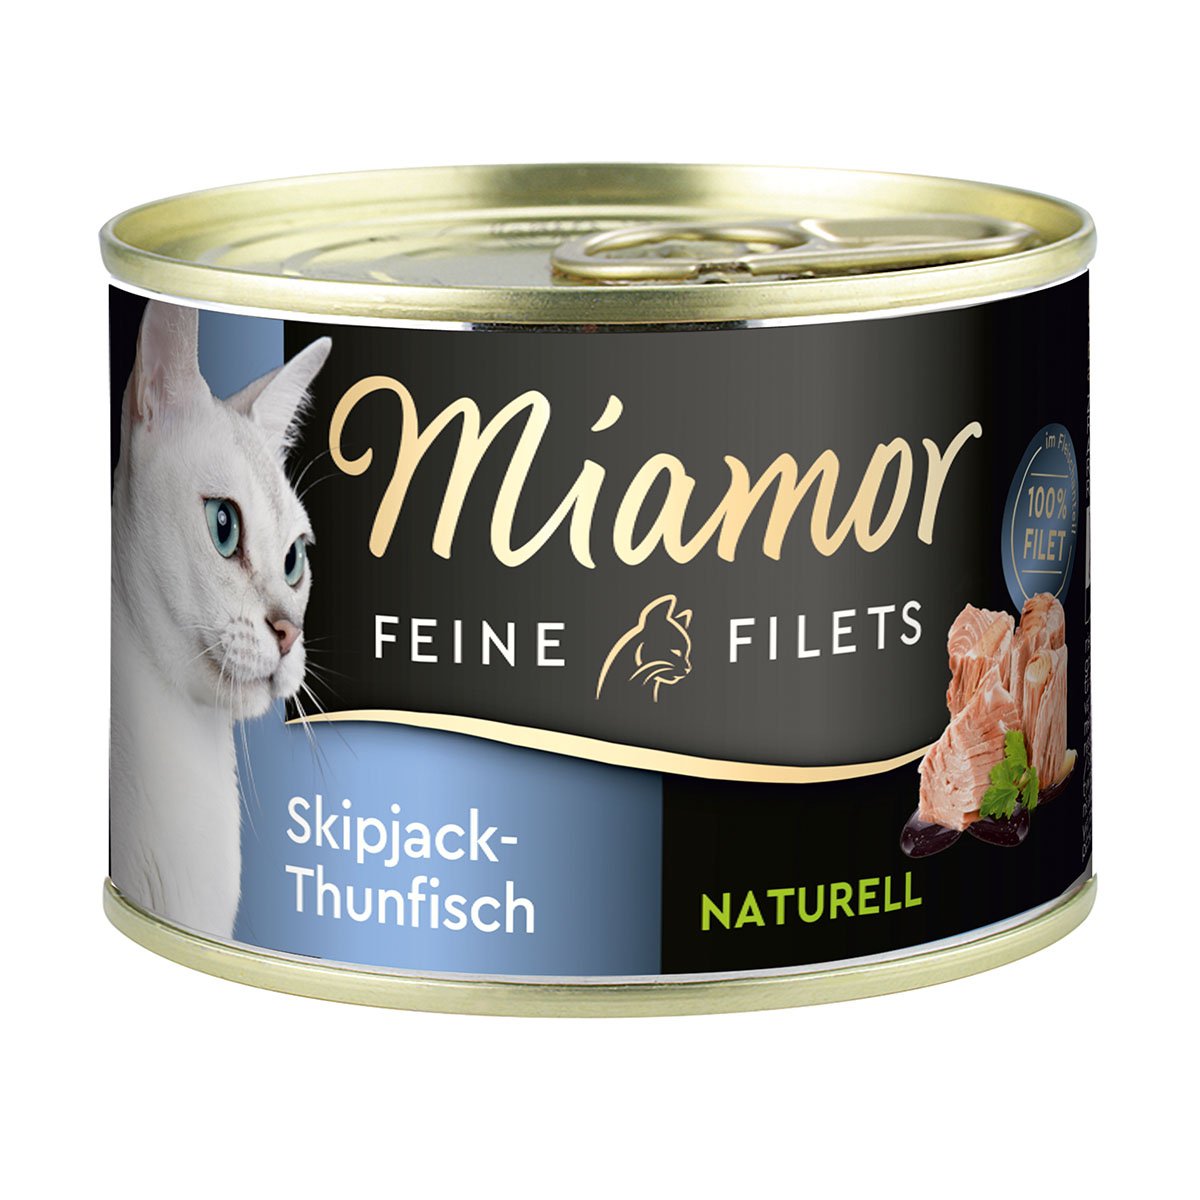 Miamor Feine Filets Naturelle Skipjack-Thunfisch 156g Dose 12x156g